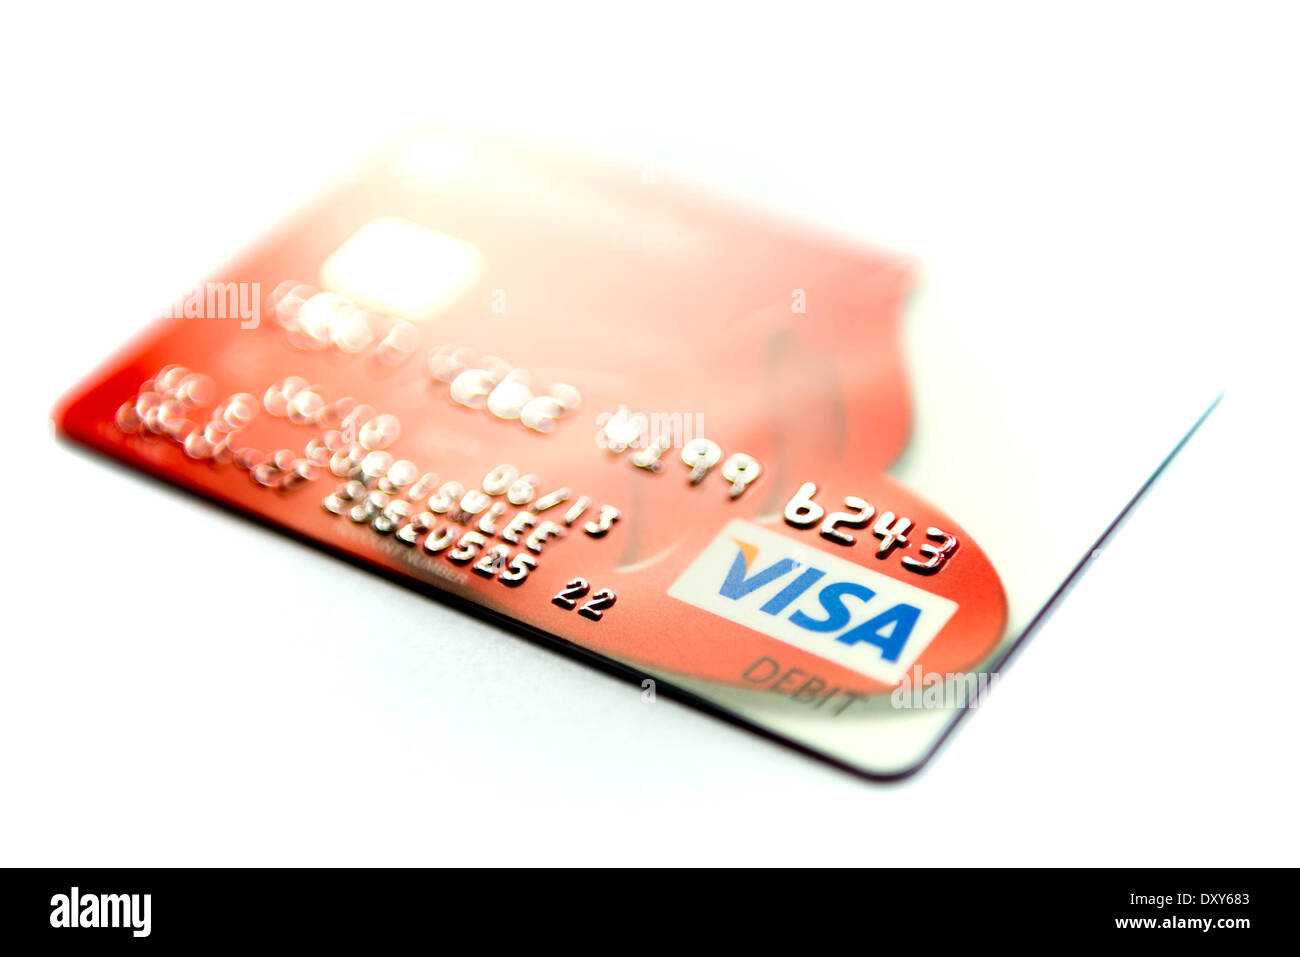 Visa debit card Stock Photo